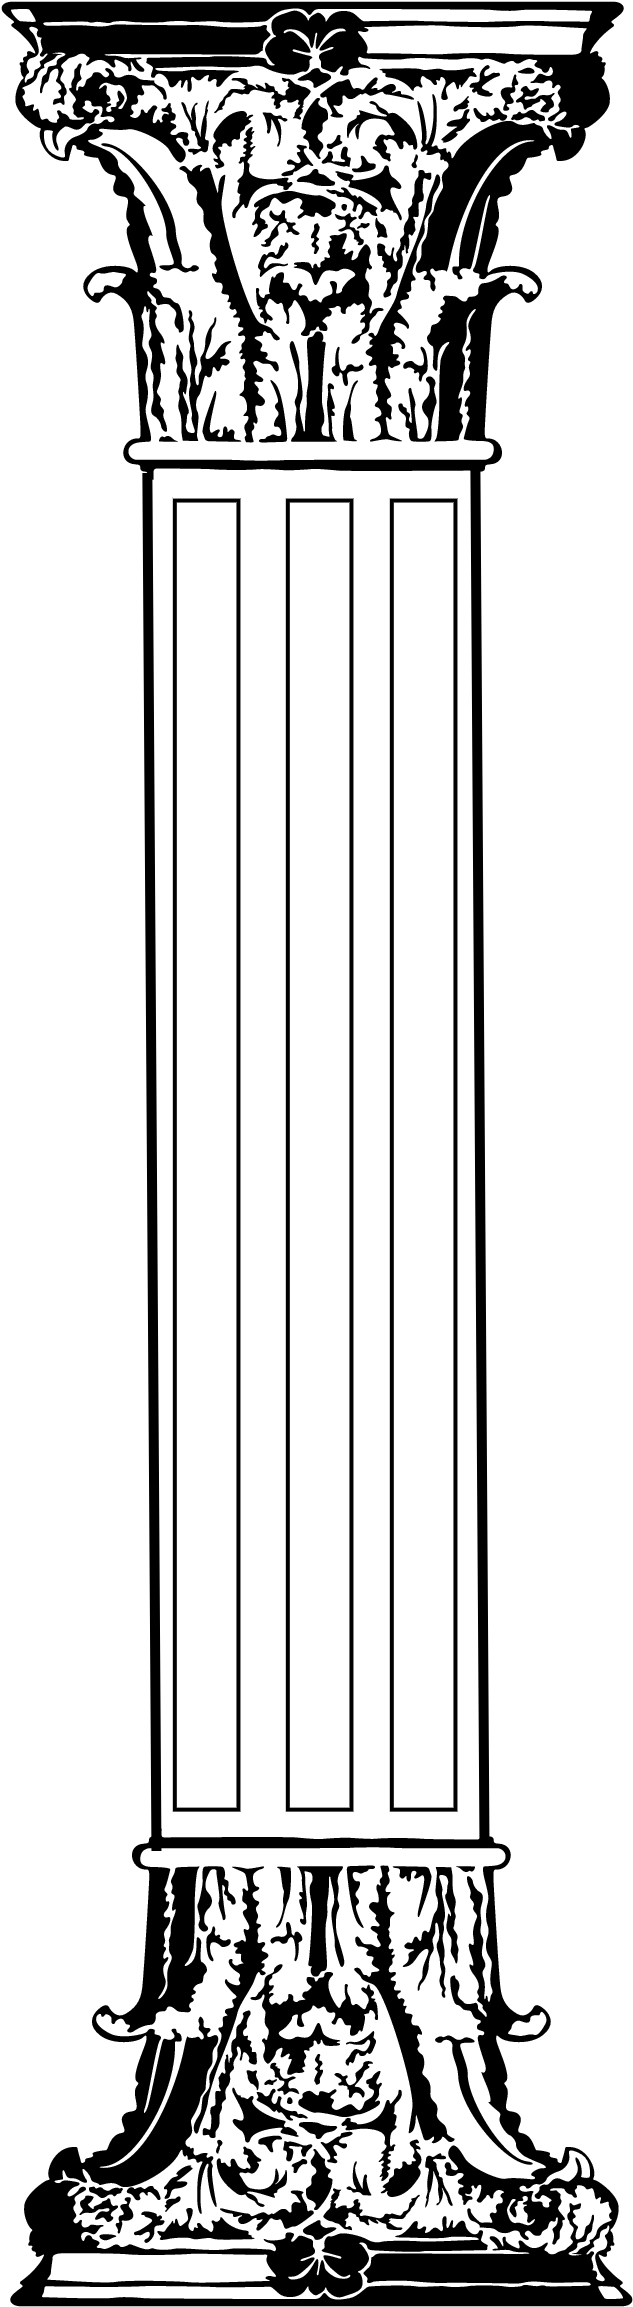 Fundamentum's Logo.